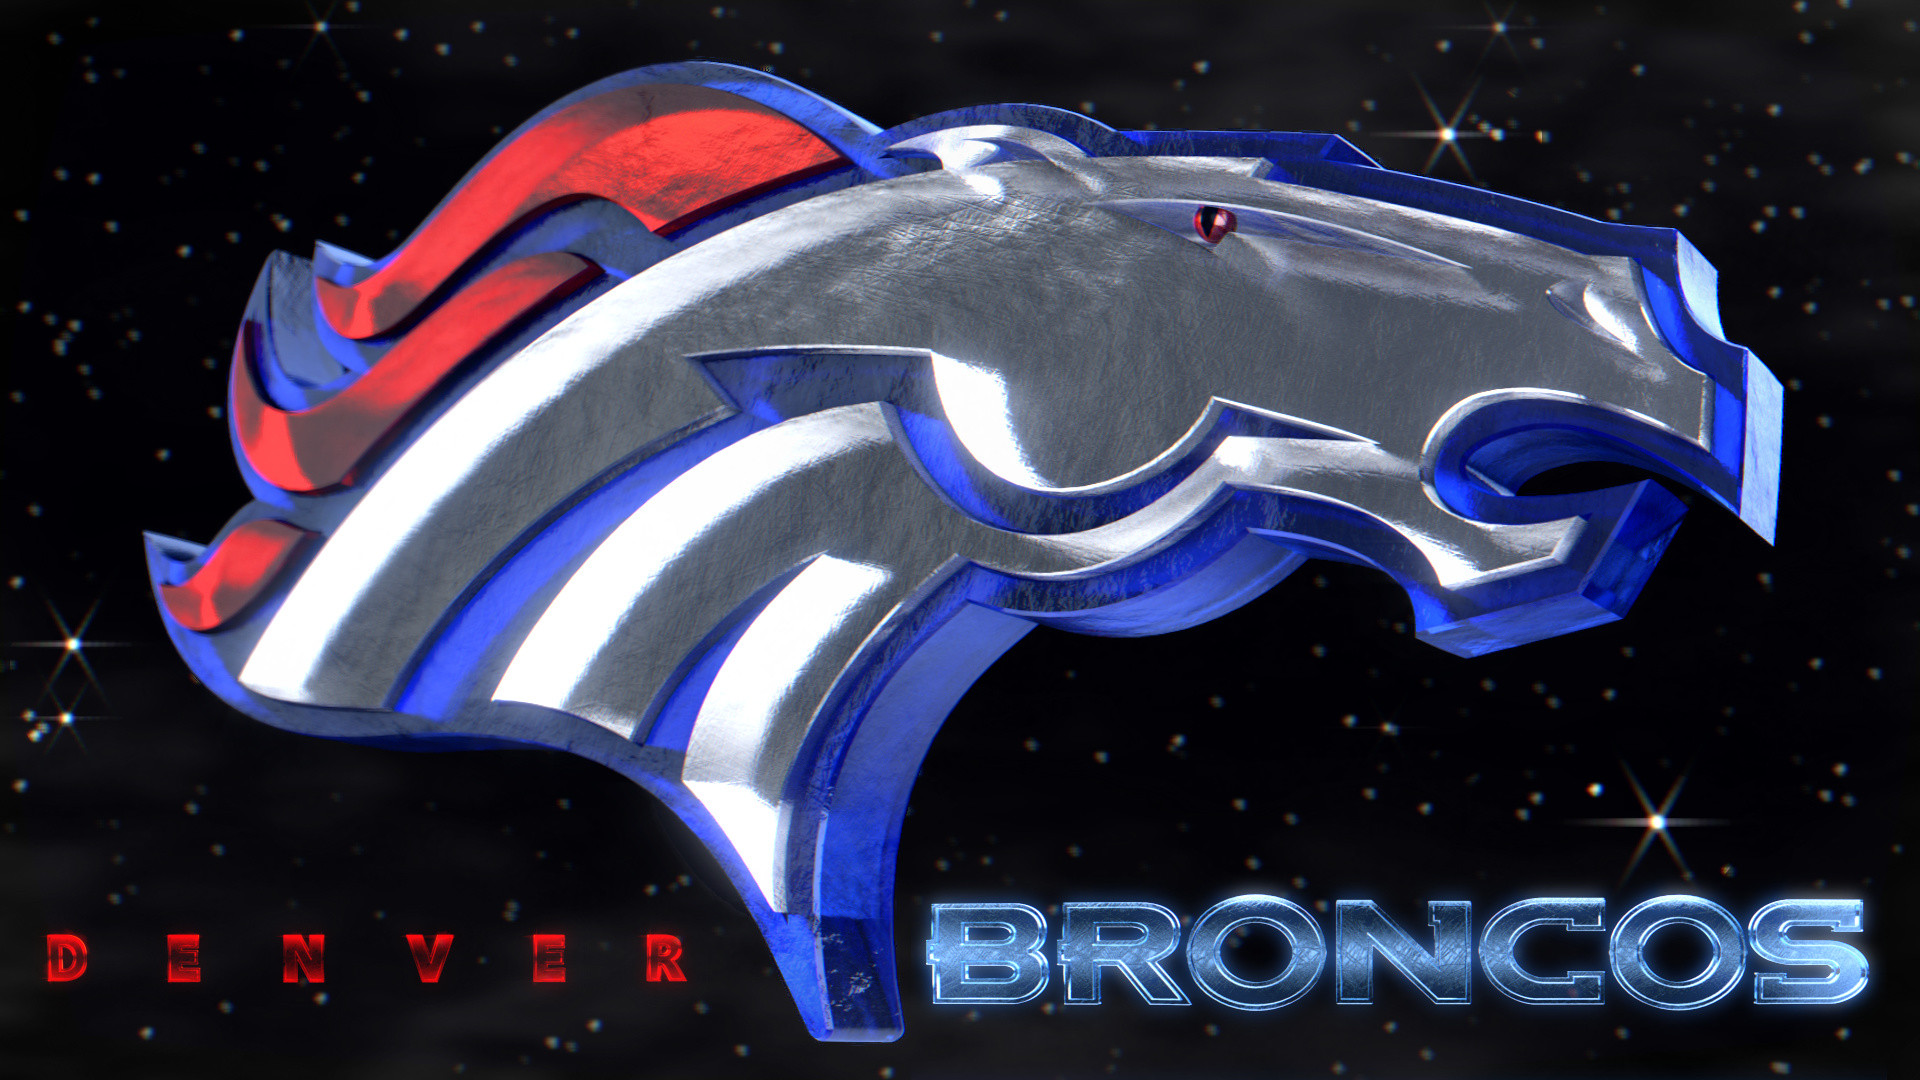 1920x1080 Denver Broncos logo by Kalle K at Coroflotcom 